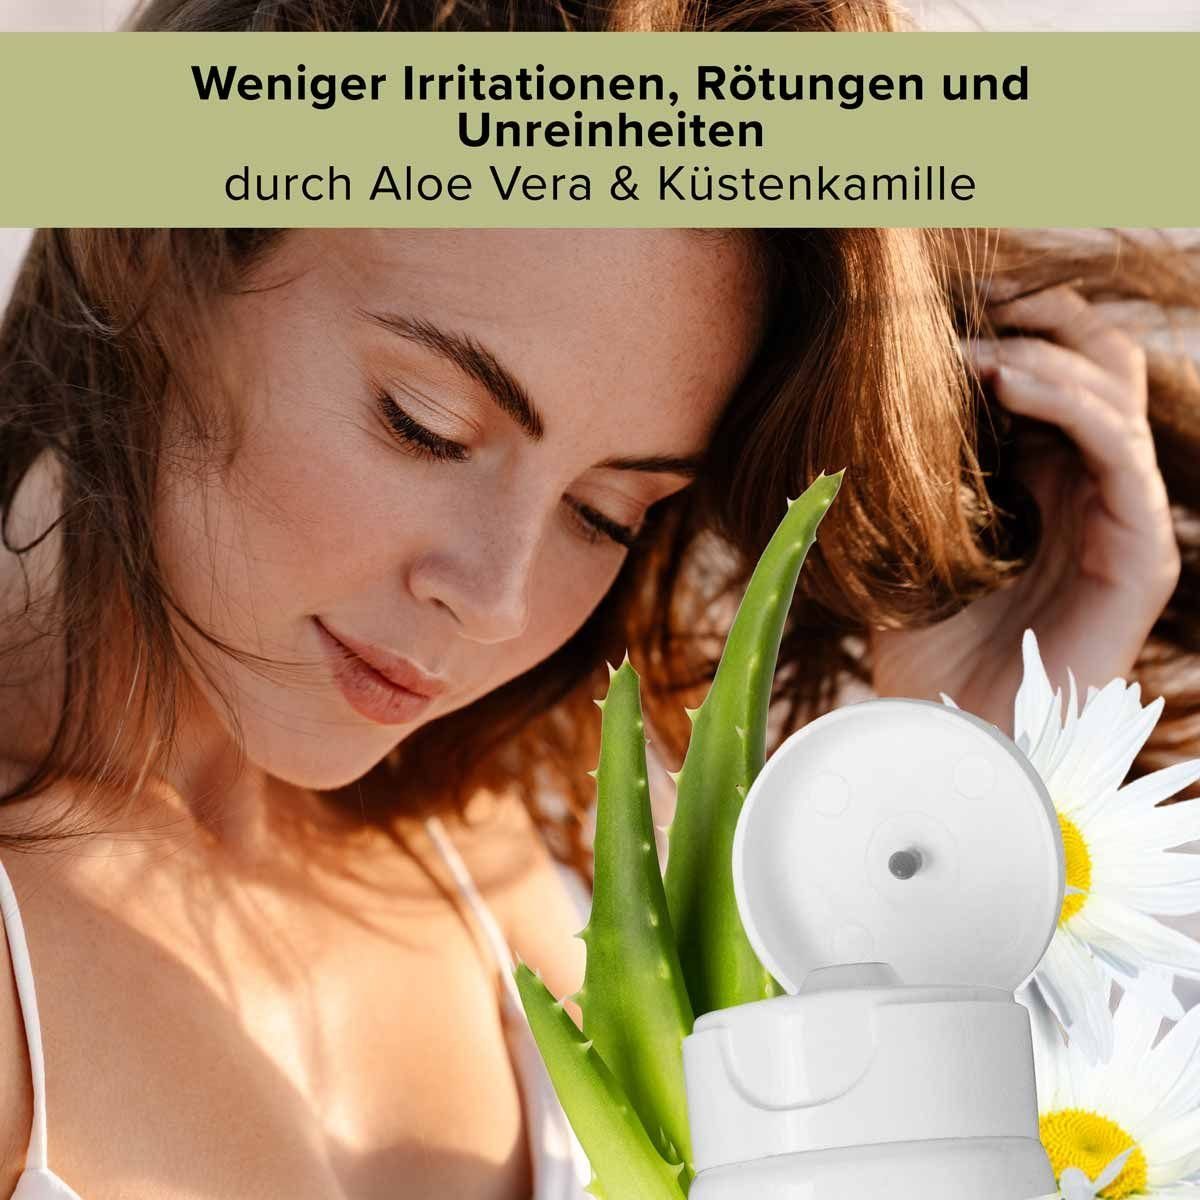 RAU Cosmetics Tagescreme Aloe - Moisturizer für Body & Haut Vera Ectoin Face mit trockene